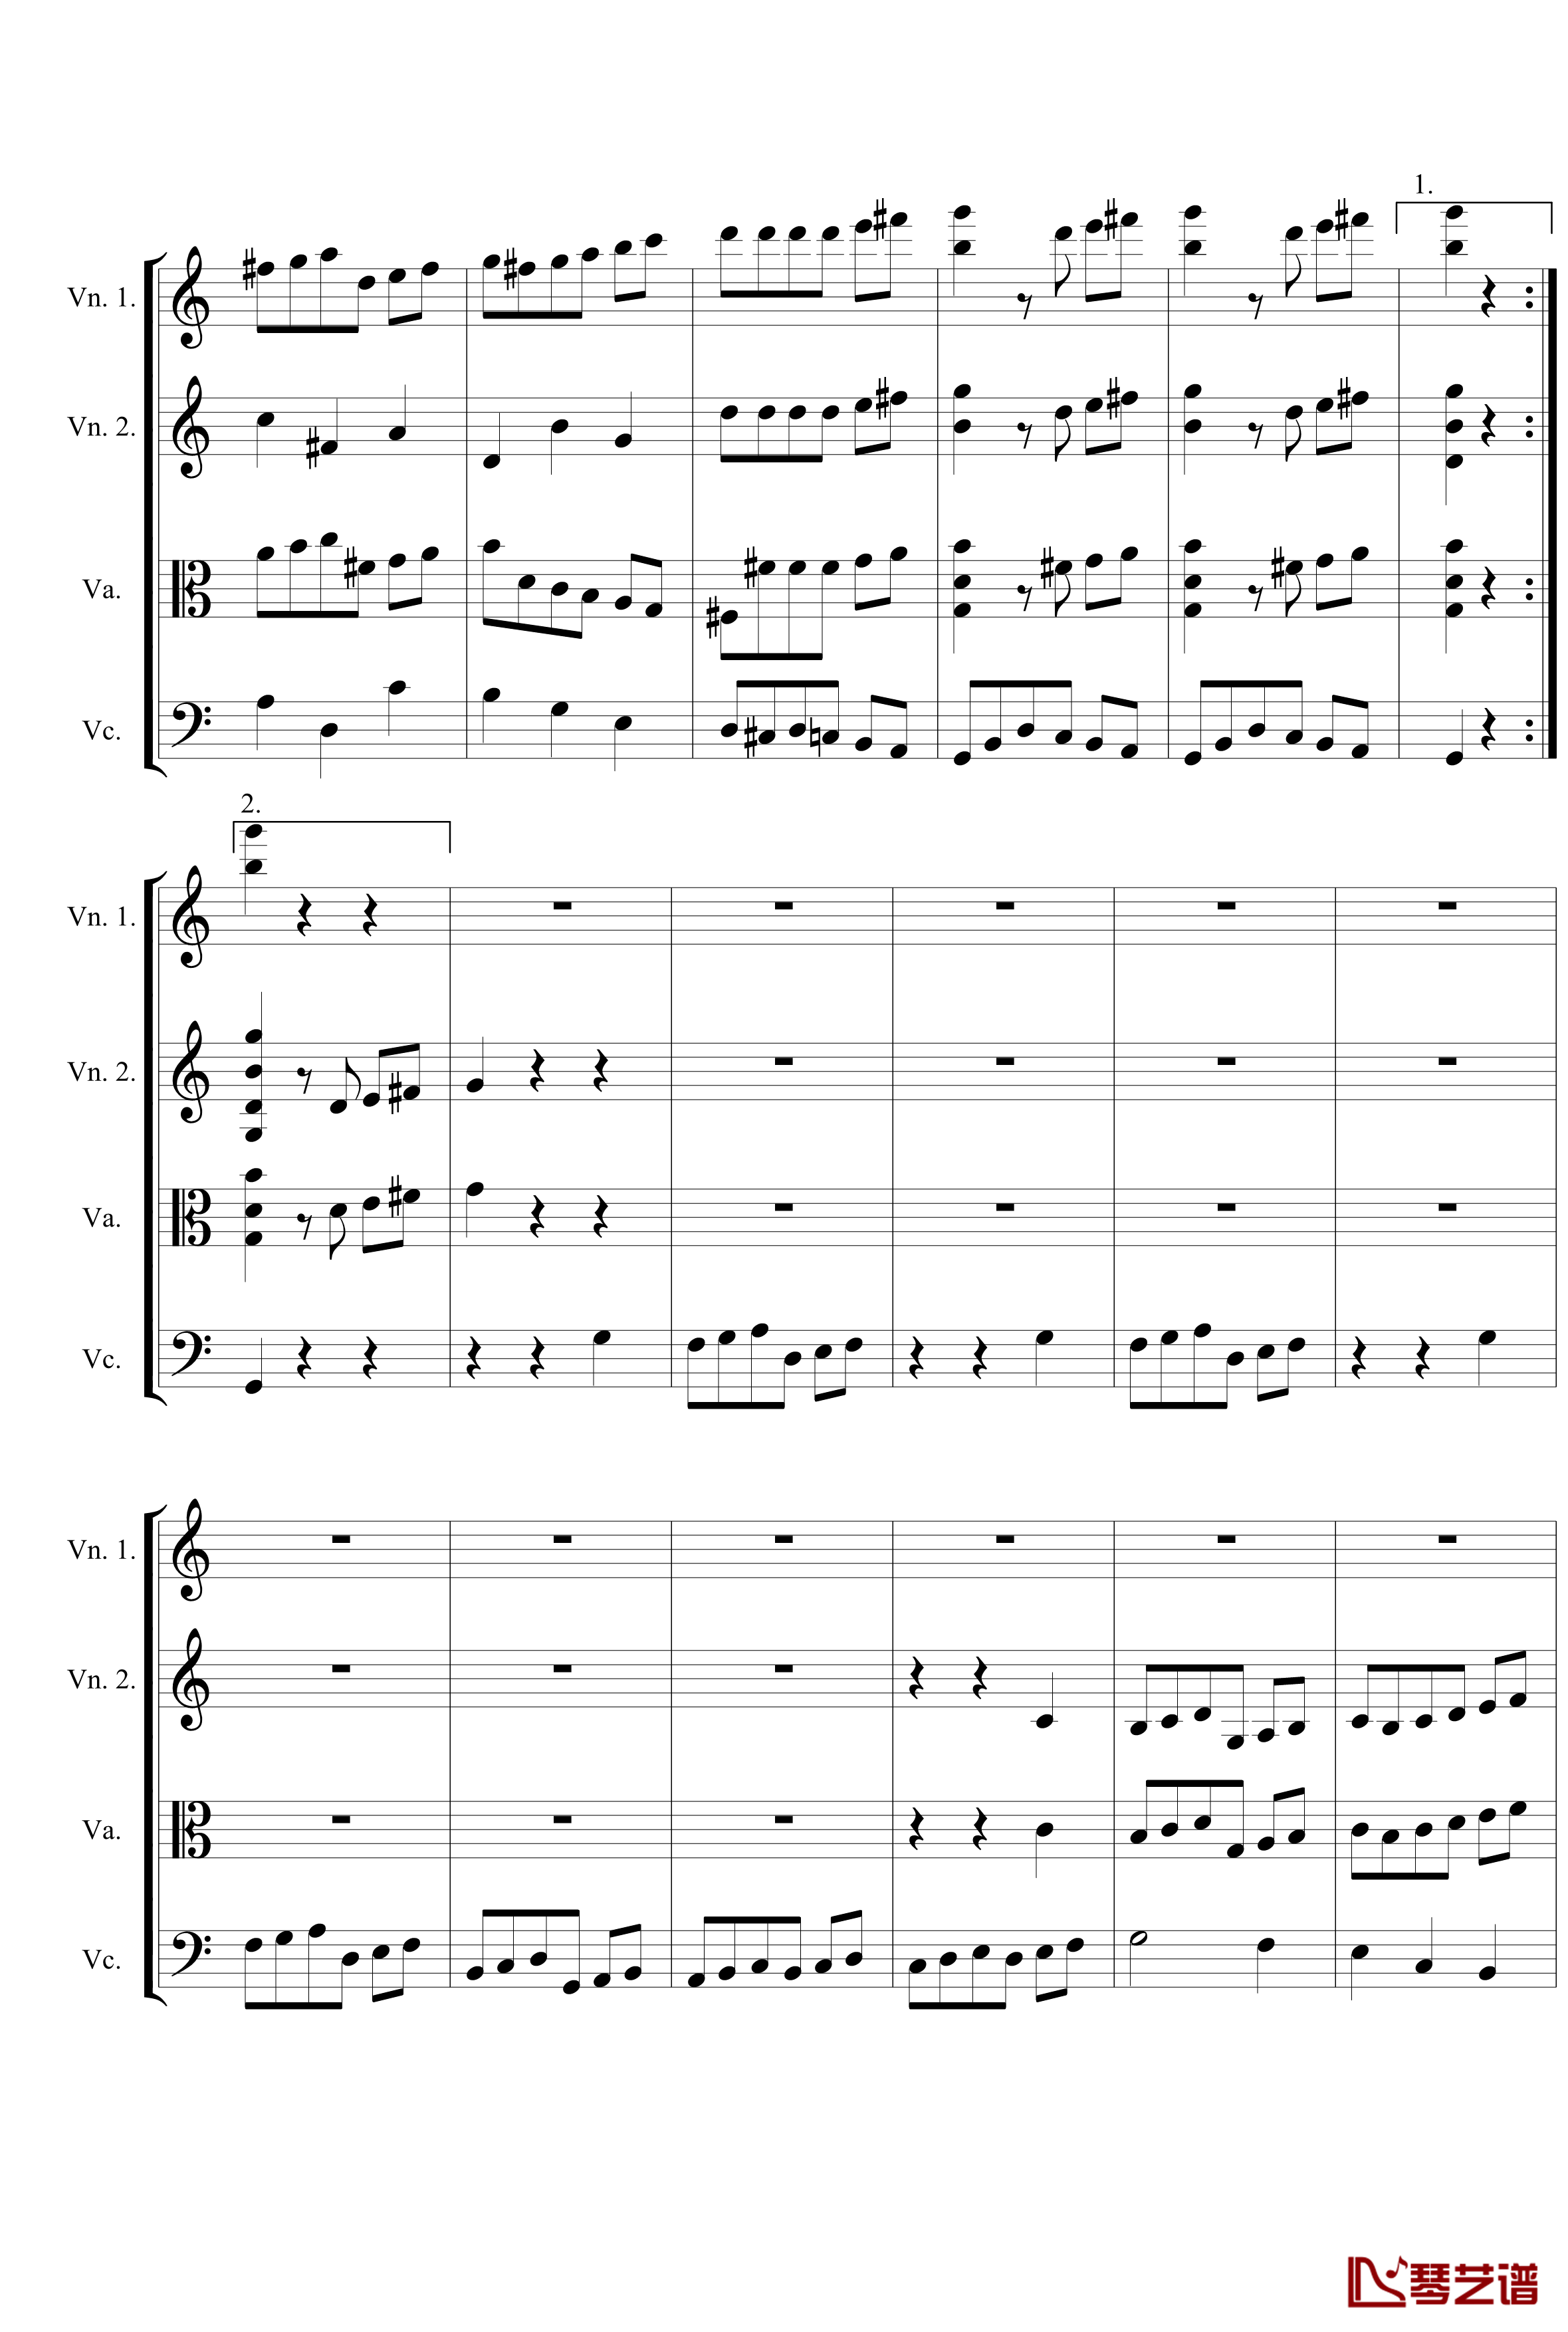 Symphony No.5 in C Minor 3rd钢琴谱-String quartet-贝多芬-beethoven12